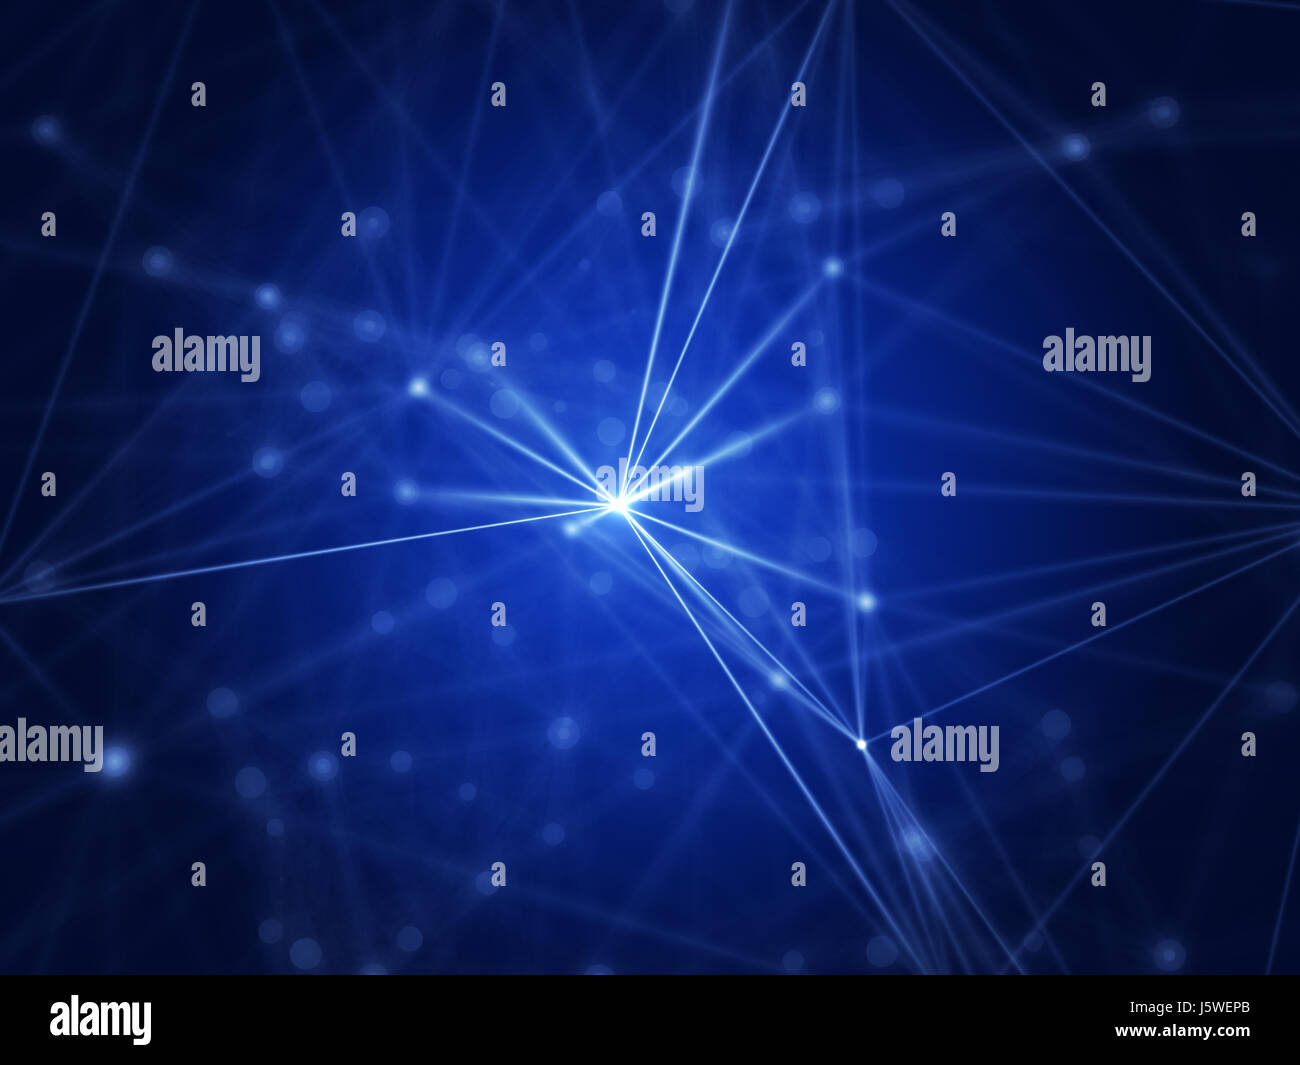 Connected dots on dark blue background, plexus background Stock Photo